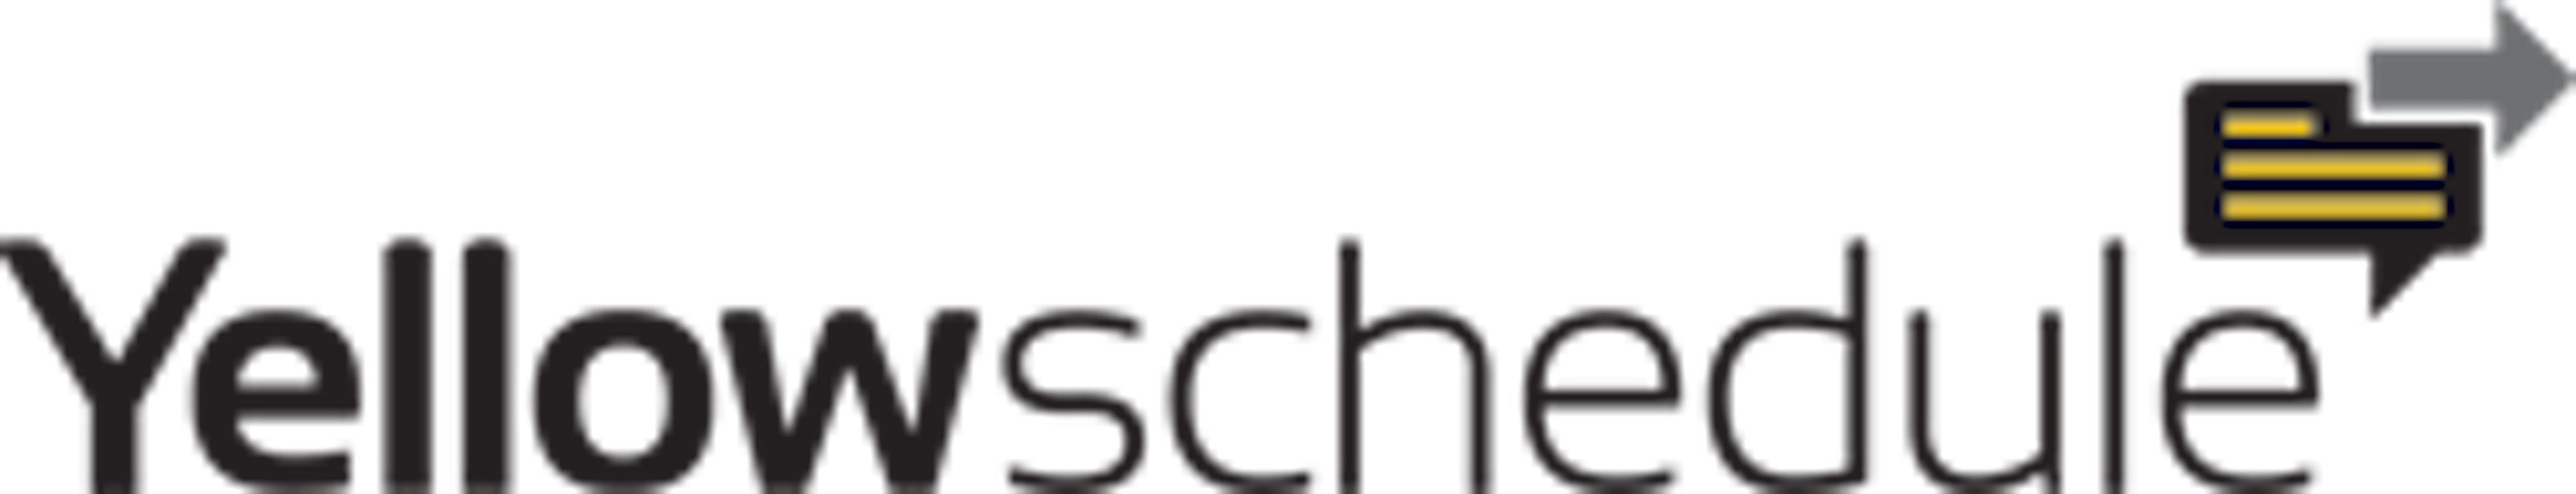 YellowSchedule Logo